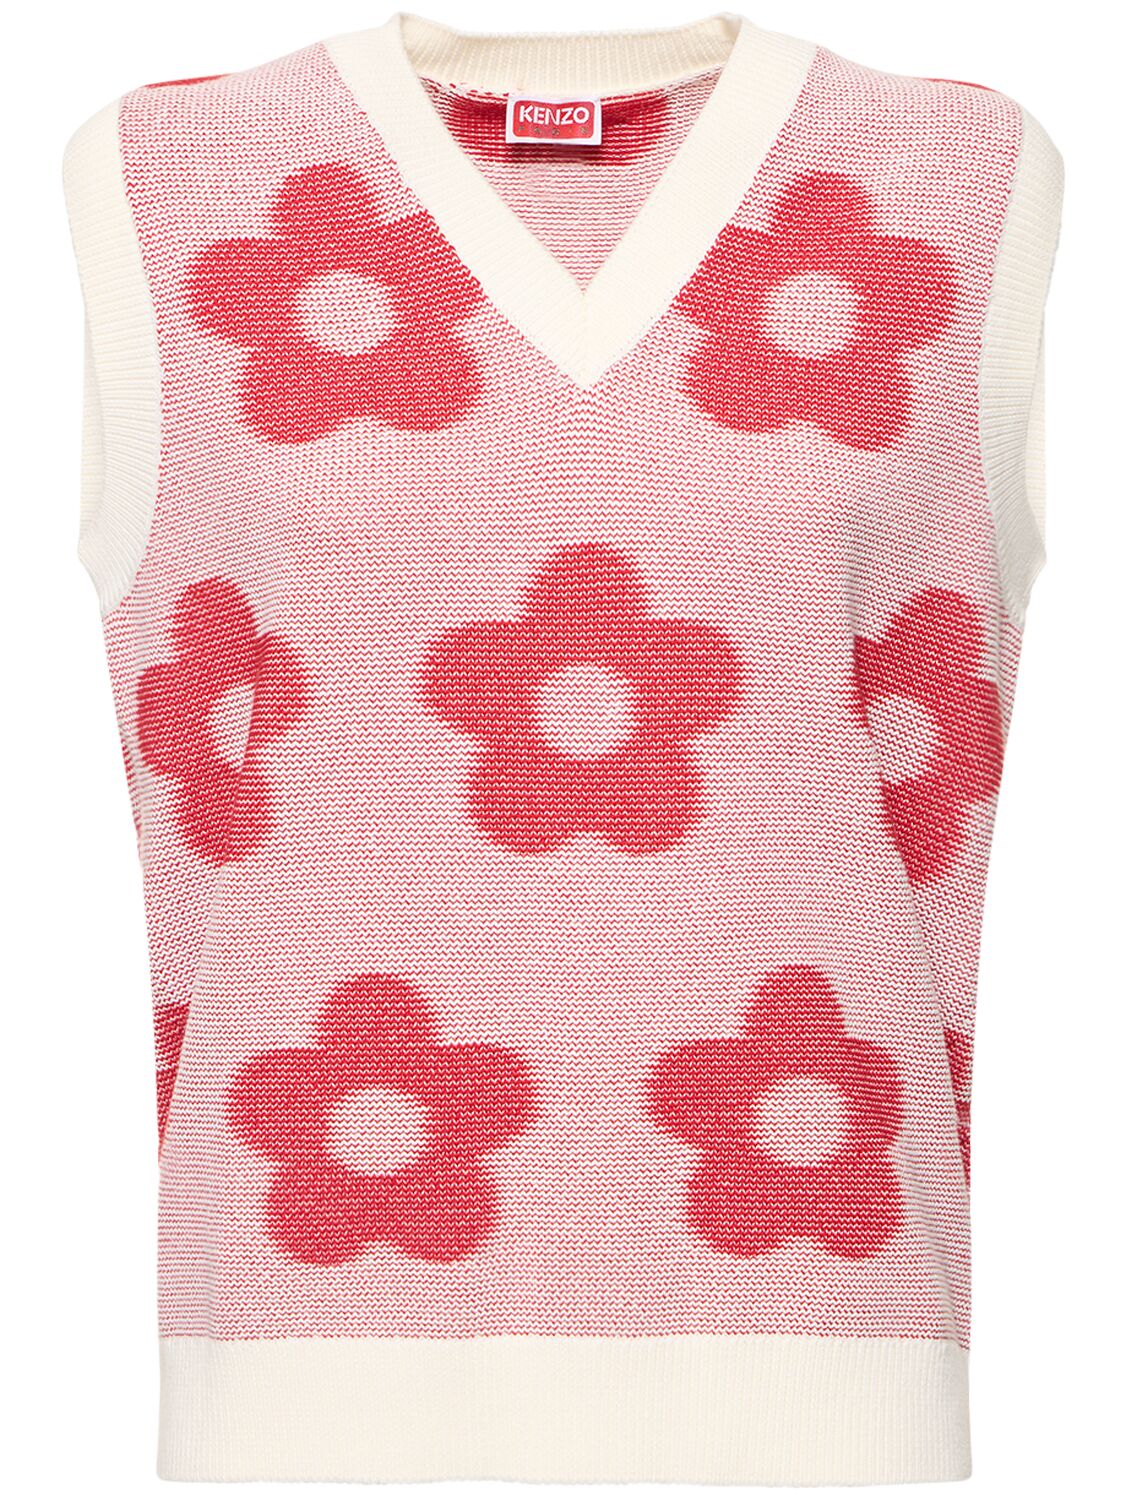 Kenzo Flower Spot Cotton Vest